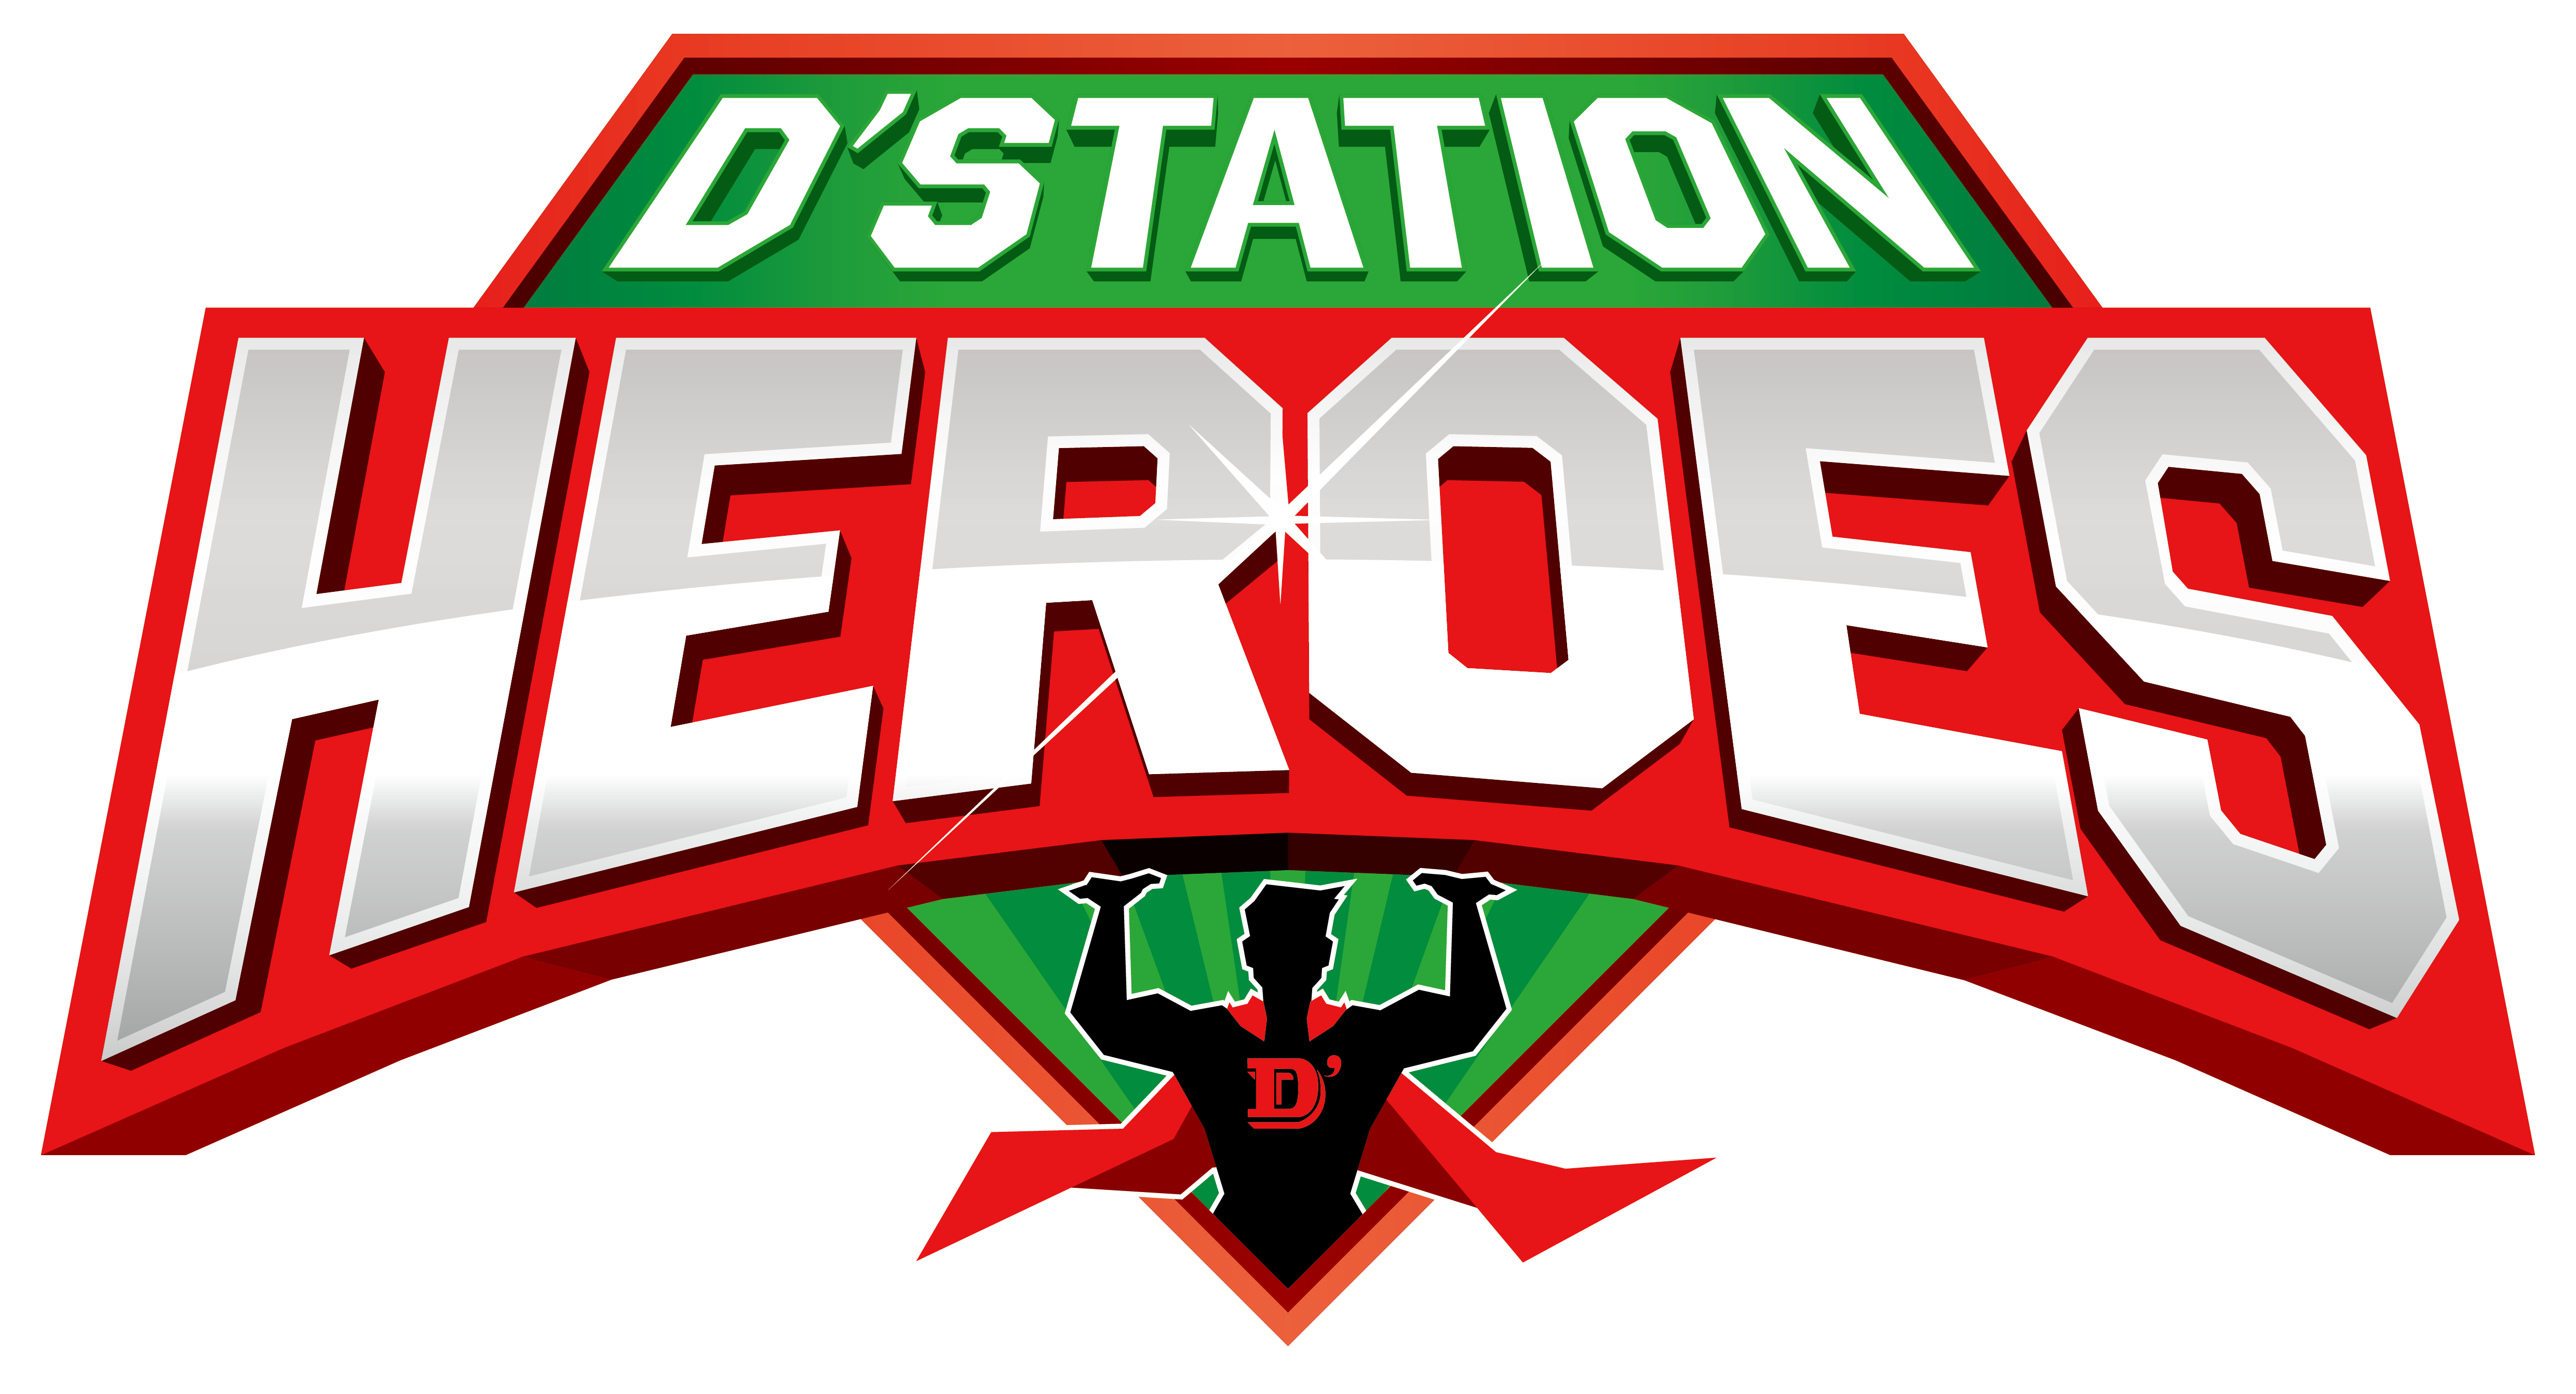 dstation_heroes_logo.png